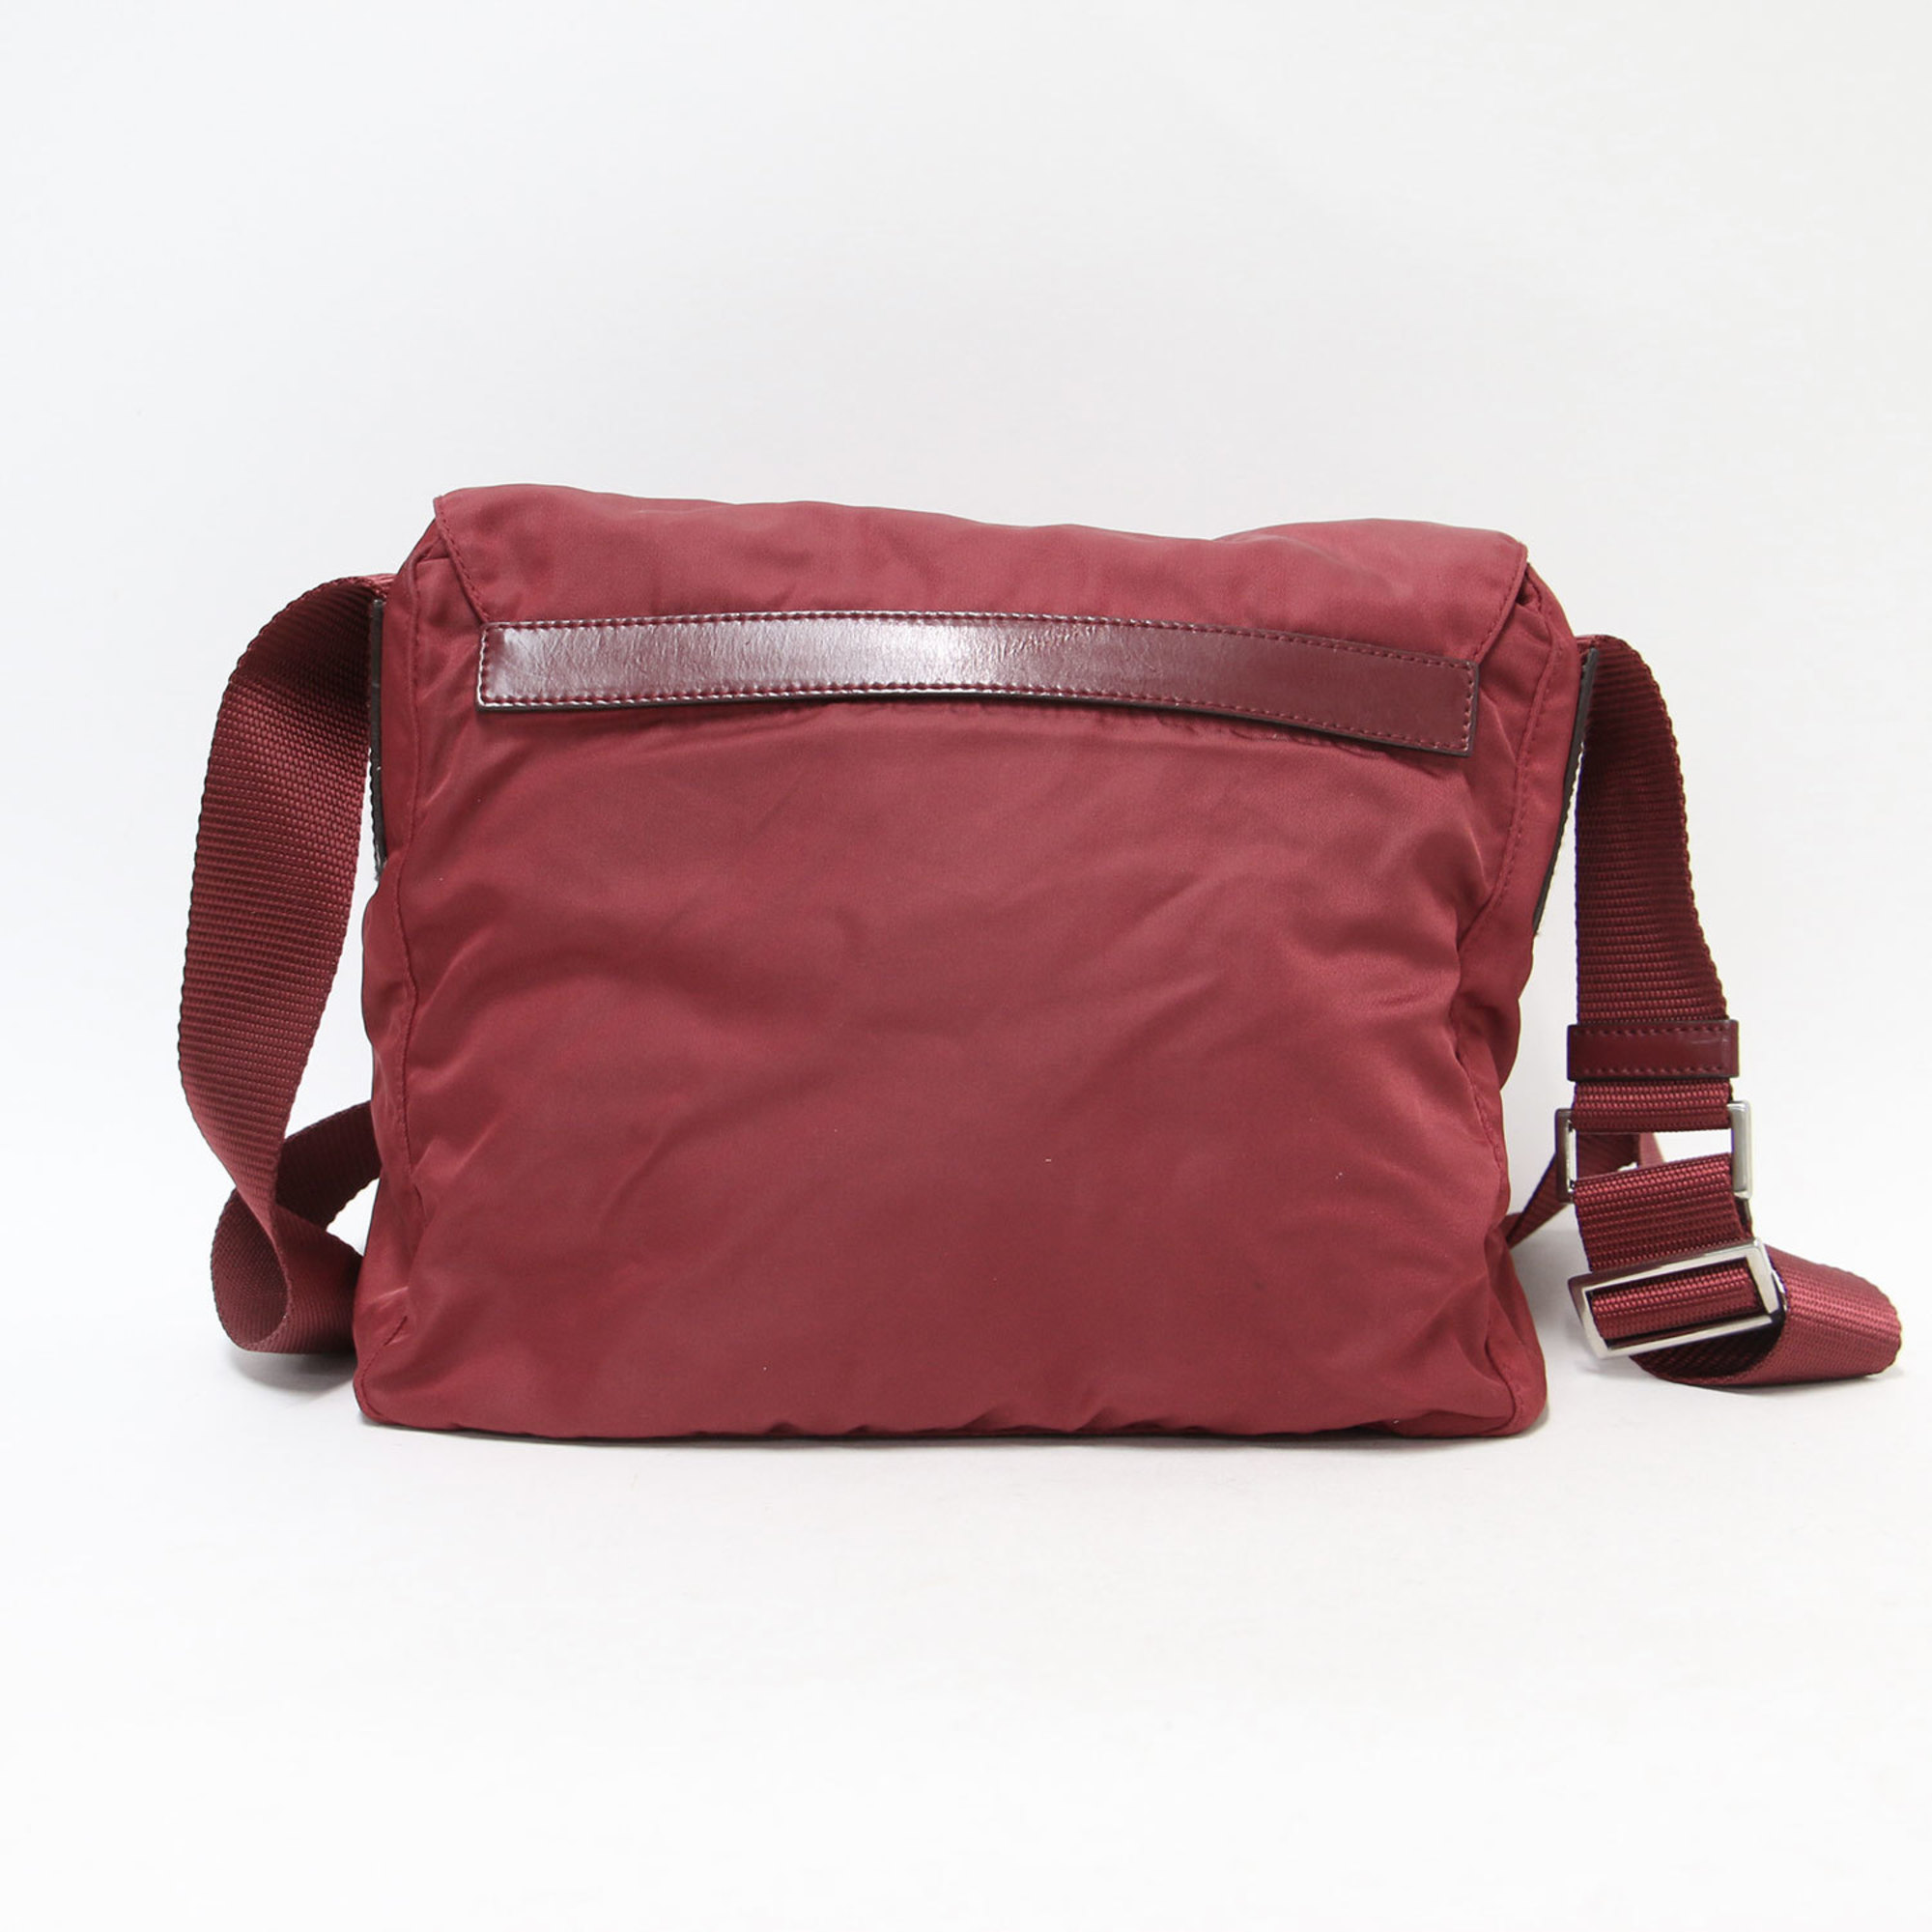 PRADA Prada Shoulder Bag Red Nylon Flap Triangle Plate VINTAGE Crossbody Women's K4072